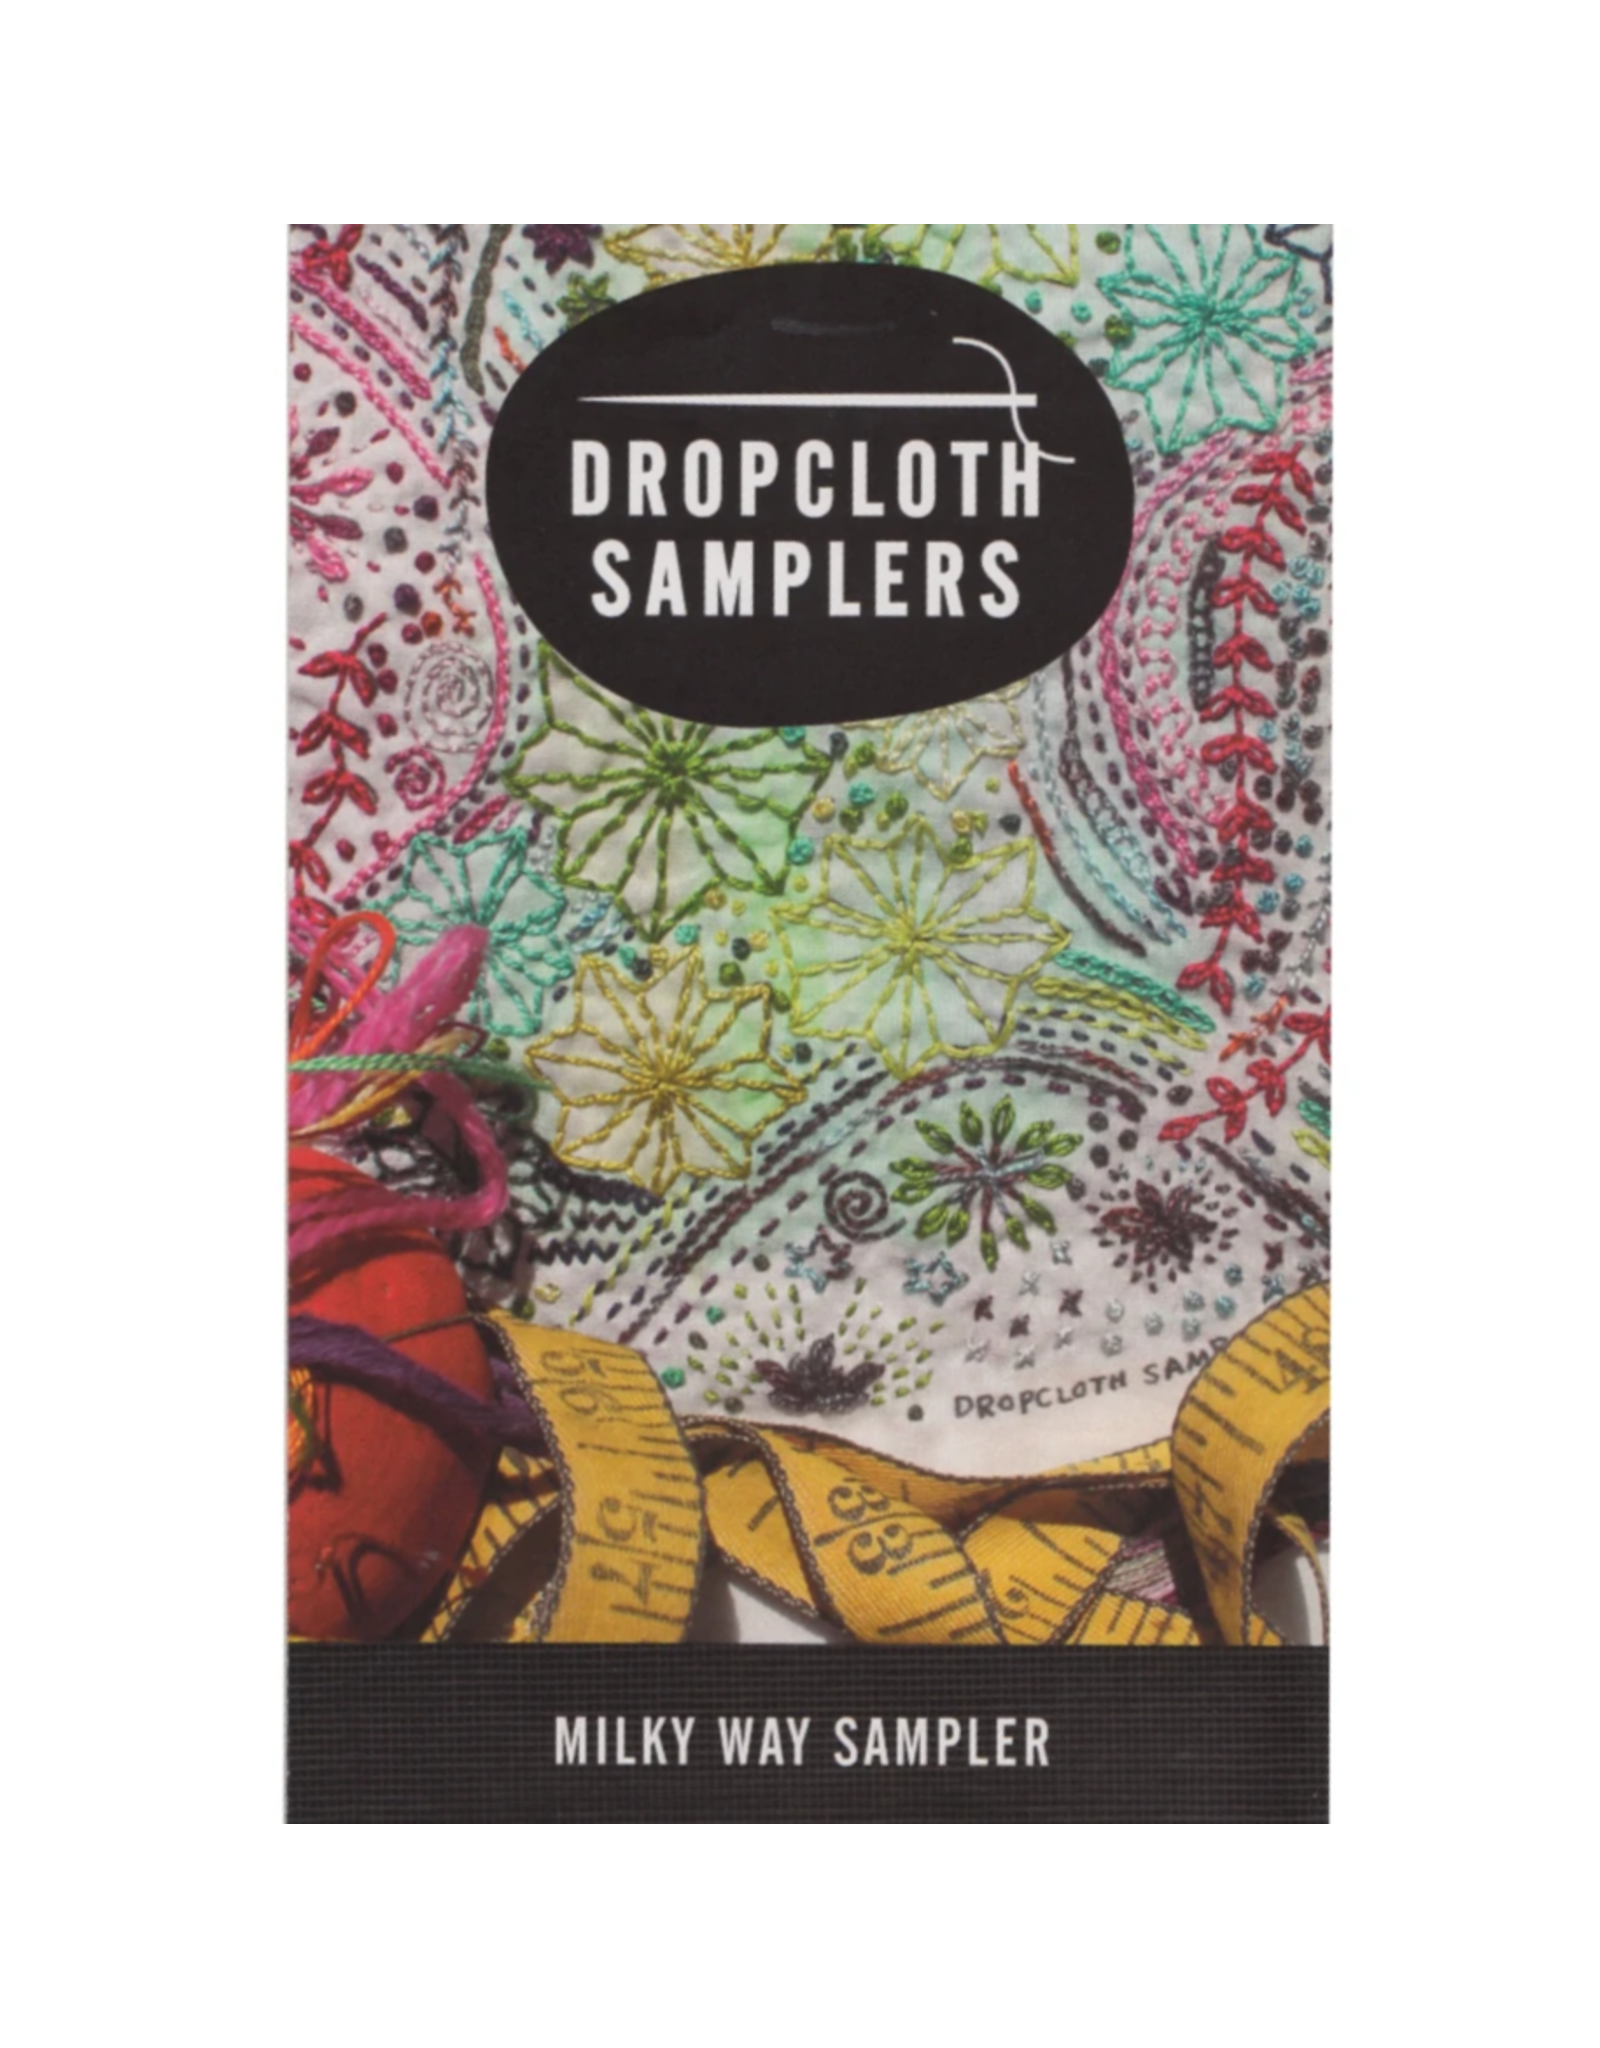 Dropcloth Samplers Milky Way Sampler,  Embroidery Sampler